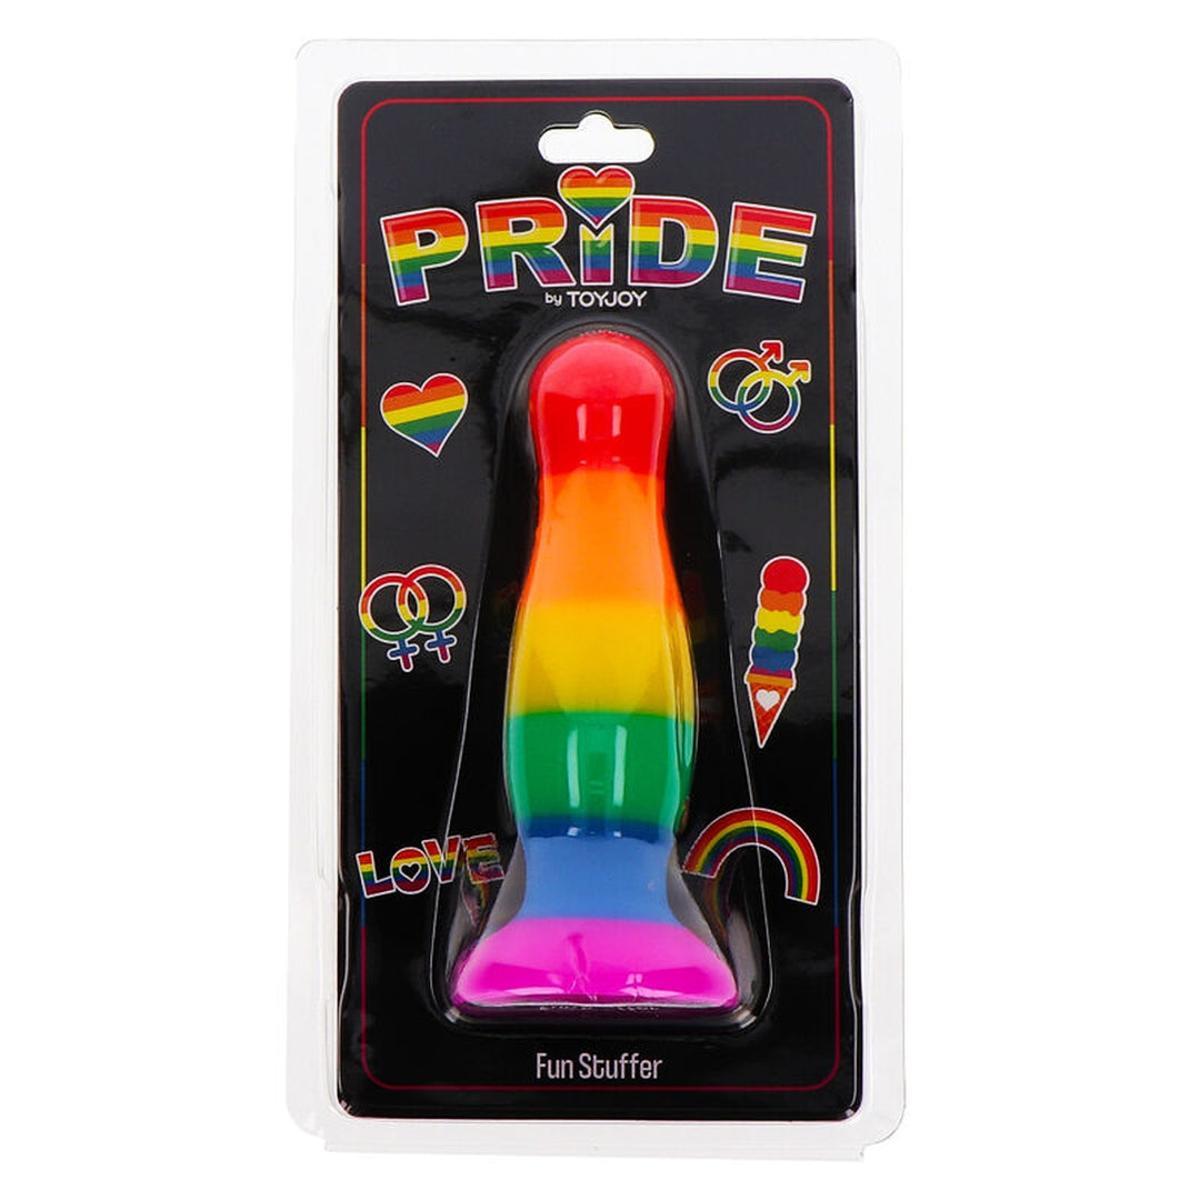 Analplug “Happy Stuffer” im LGBT Flaggen Design OH MY! FANTASY